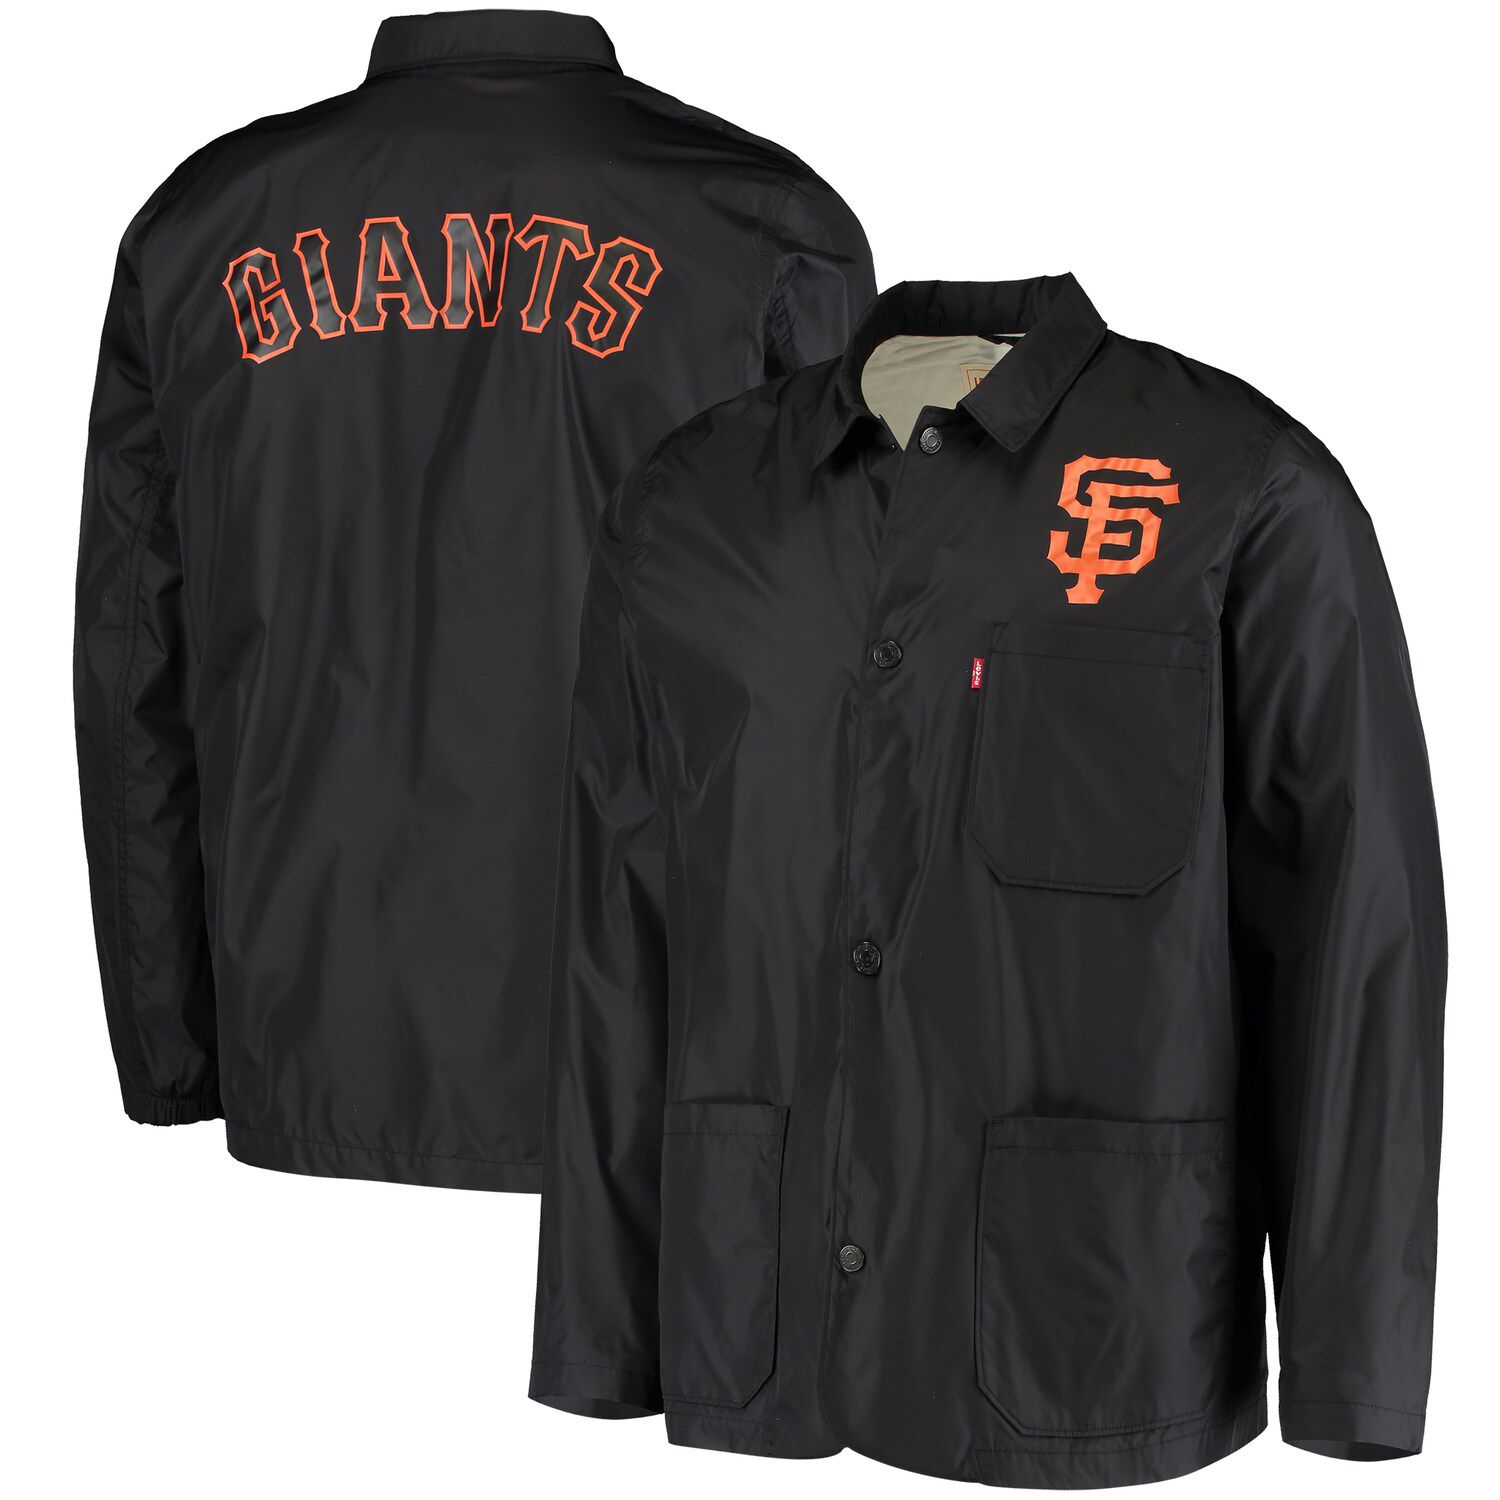 Black San Francisco Giants Club Full 